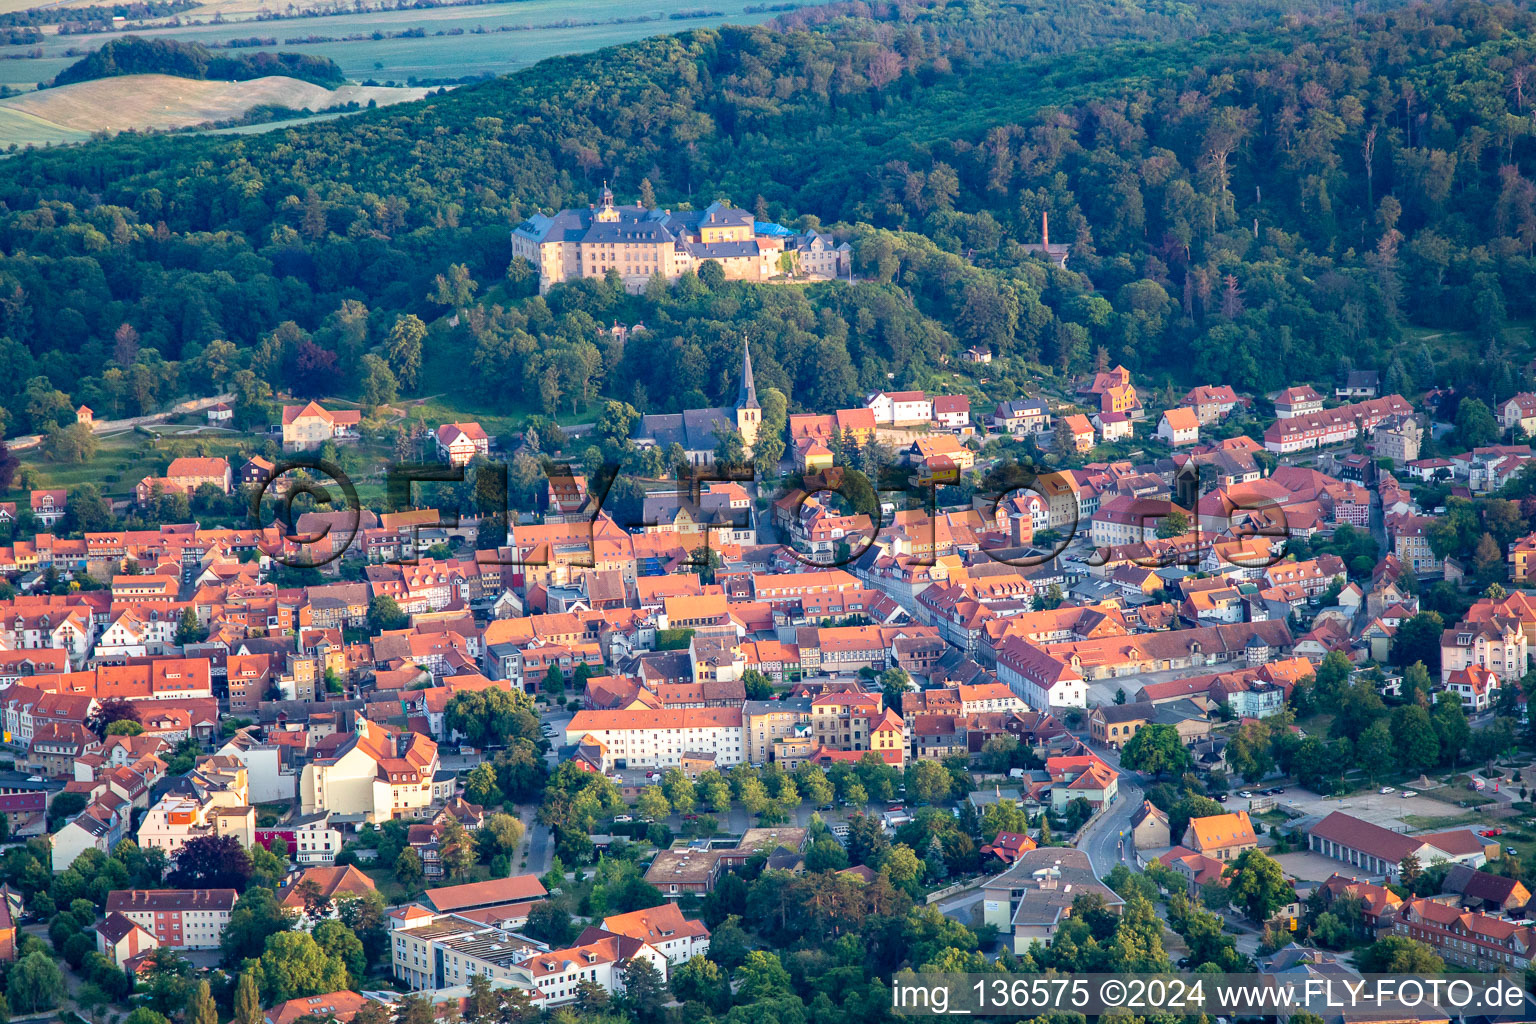 Aerial view of Castle hotel Blankenburg in Blankenburg in the state Saxony-Anhalt, Germany